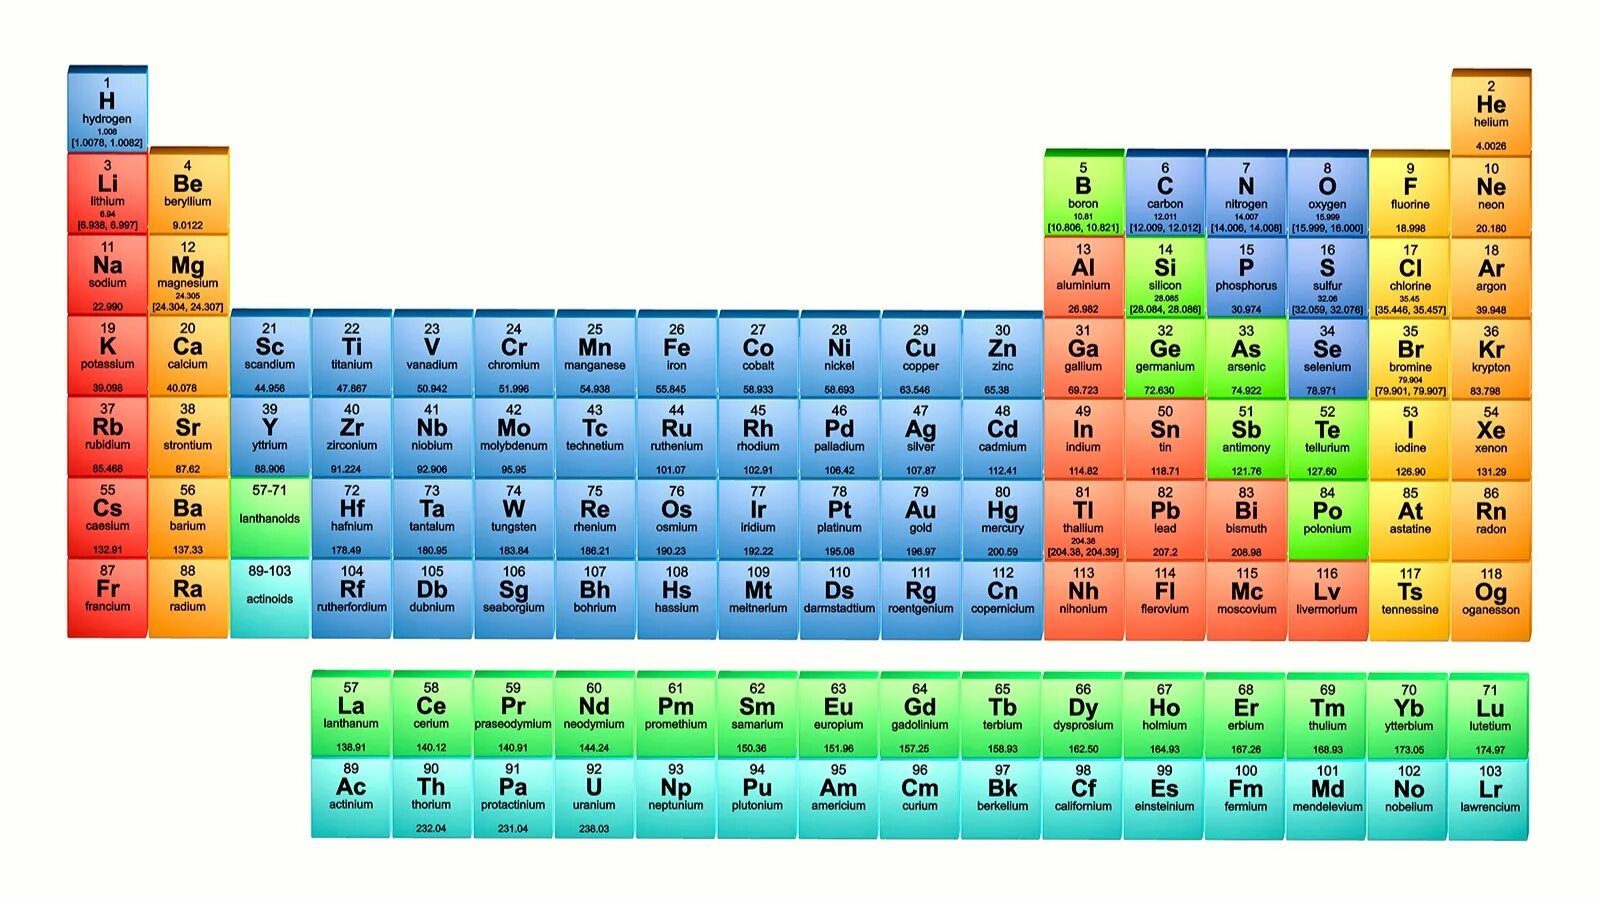 Mendeleev Table of elements. 113 Элемент таблицы Менделеева. Элементы таблицы на экран